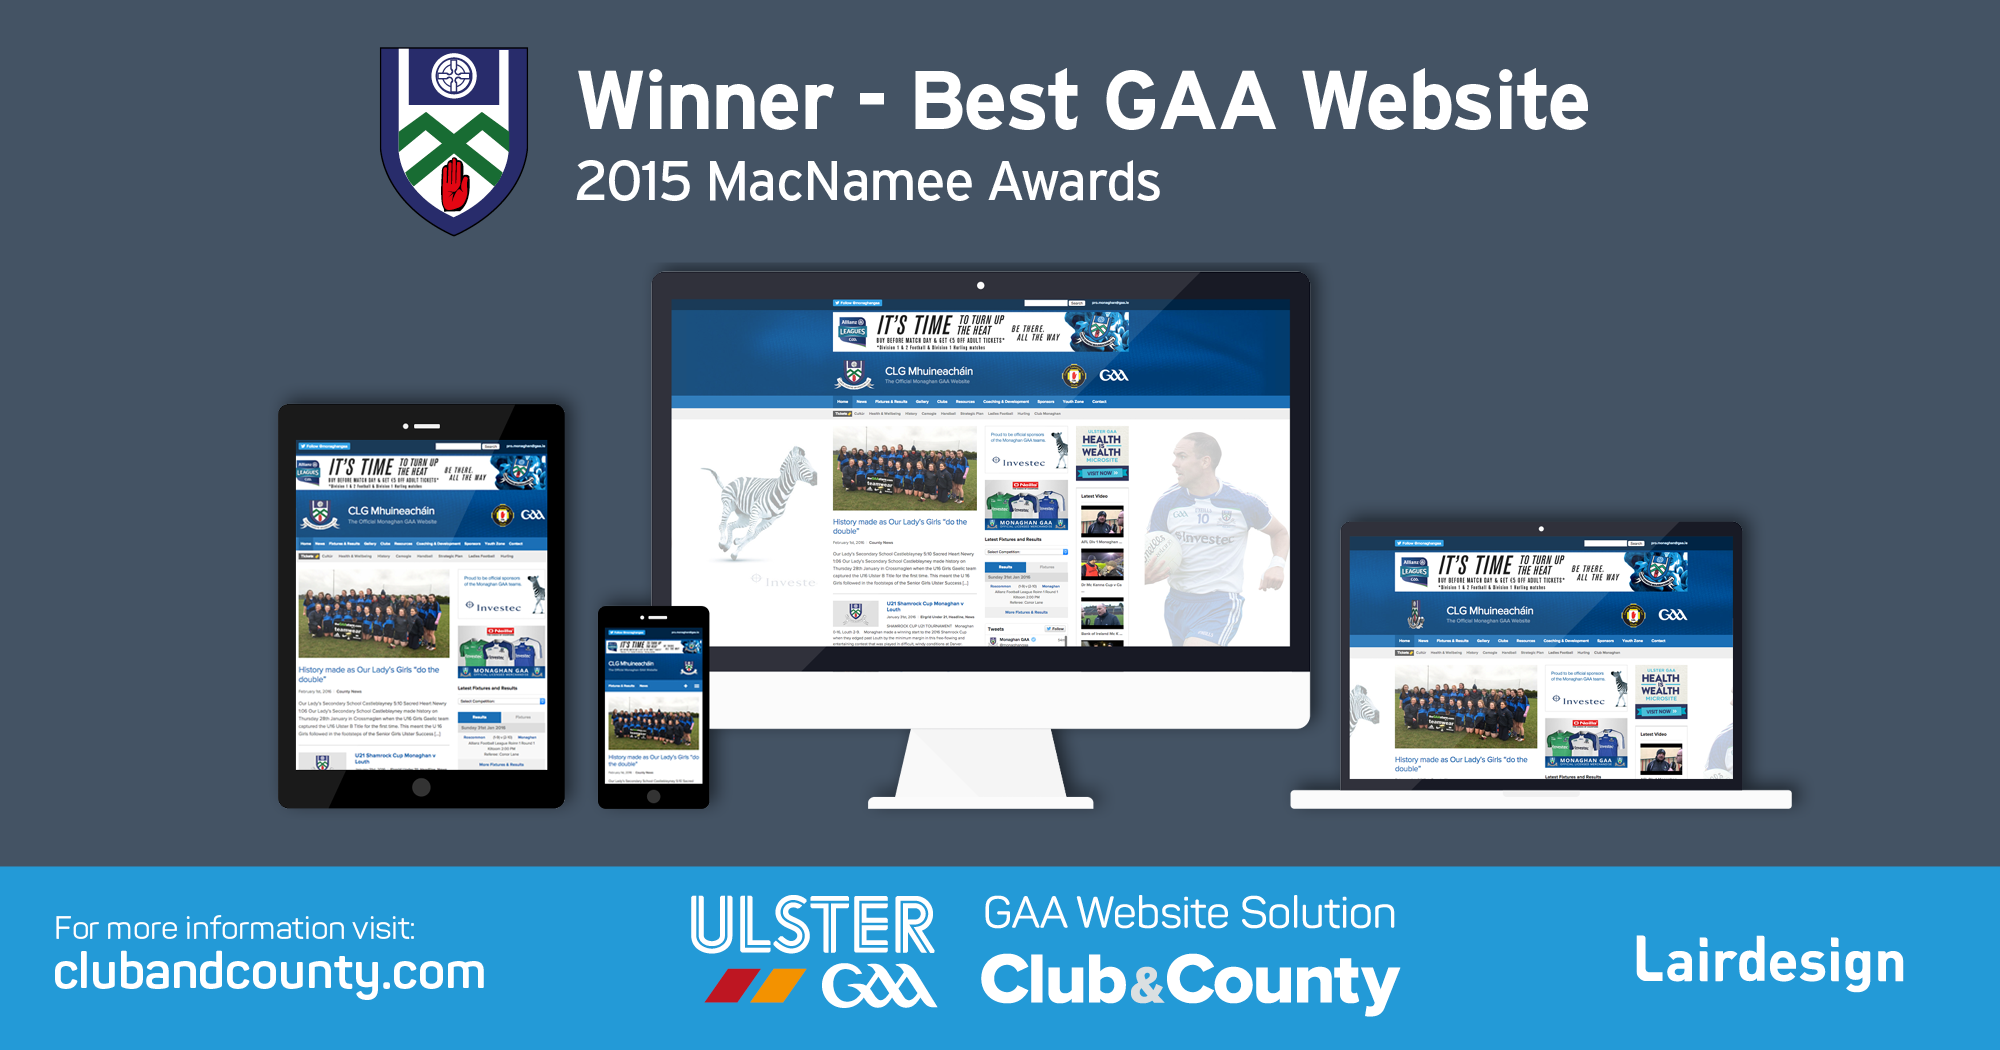 Monaghangaa.ie wins GAA Website of the Year at the 2015 MacNamee Awards